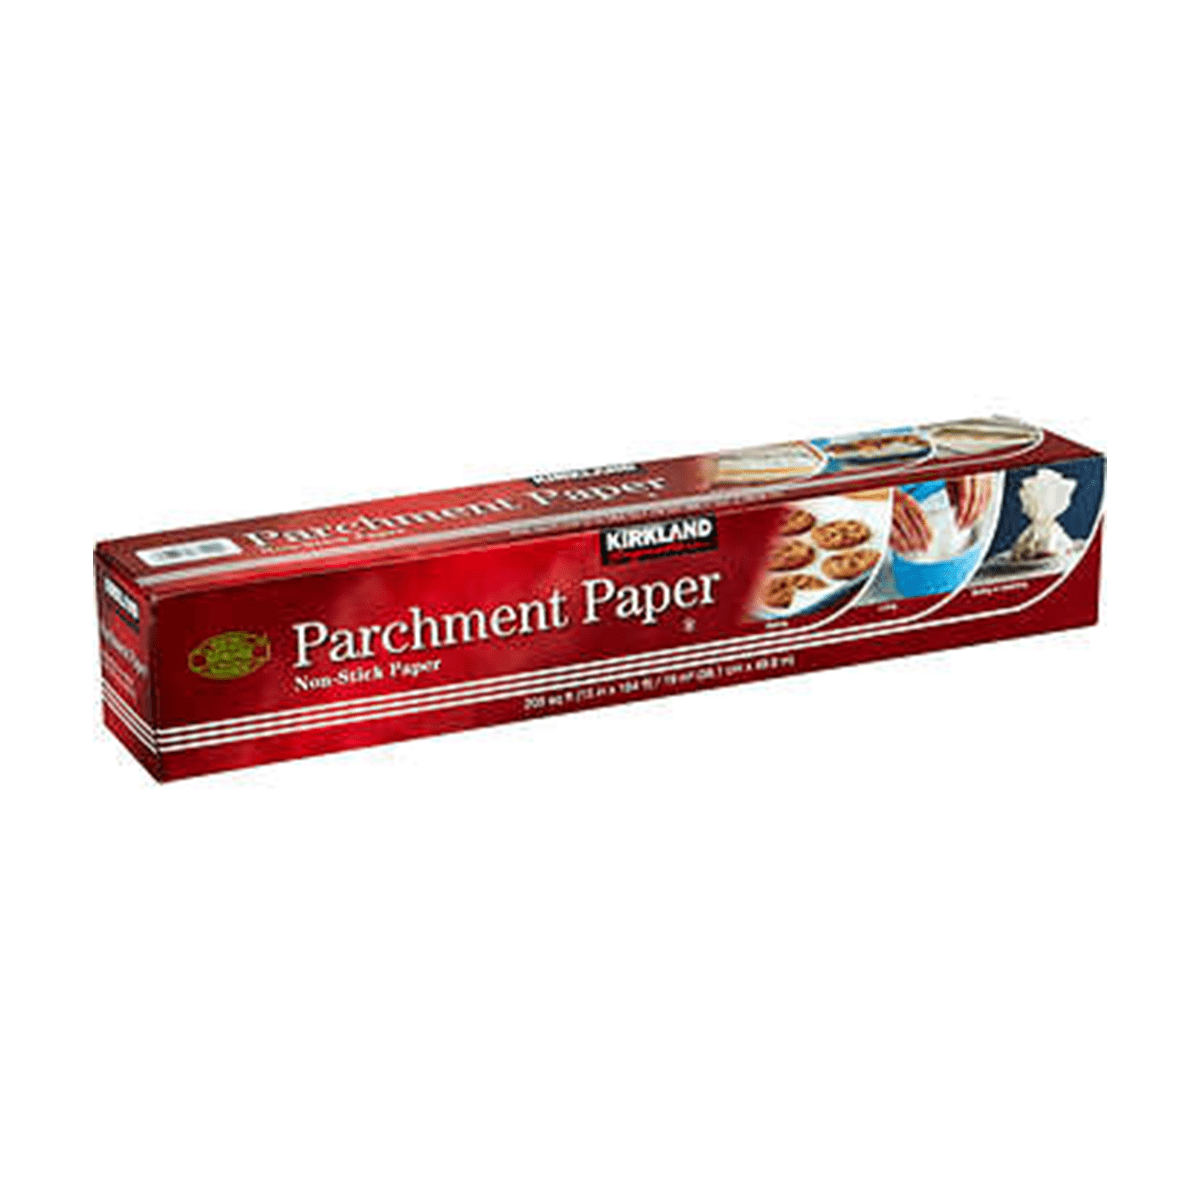 Costco Members: LARGE Kirkland Signature Parchment Paper 2-Packs Only $9.99